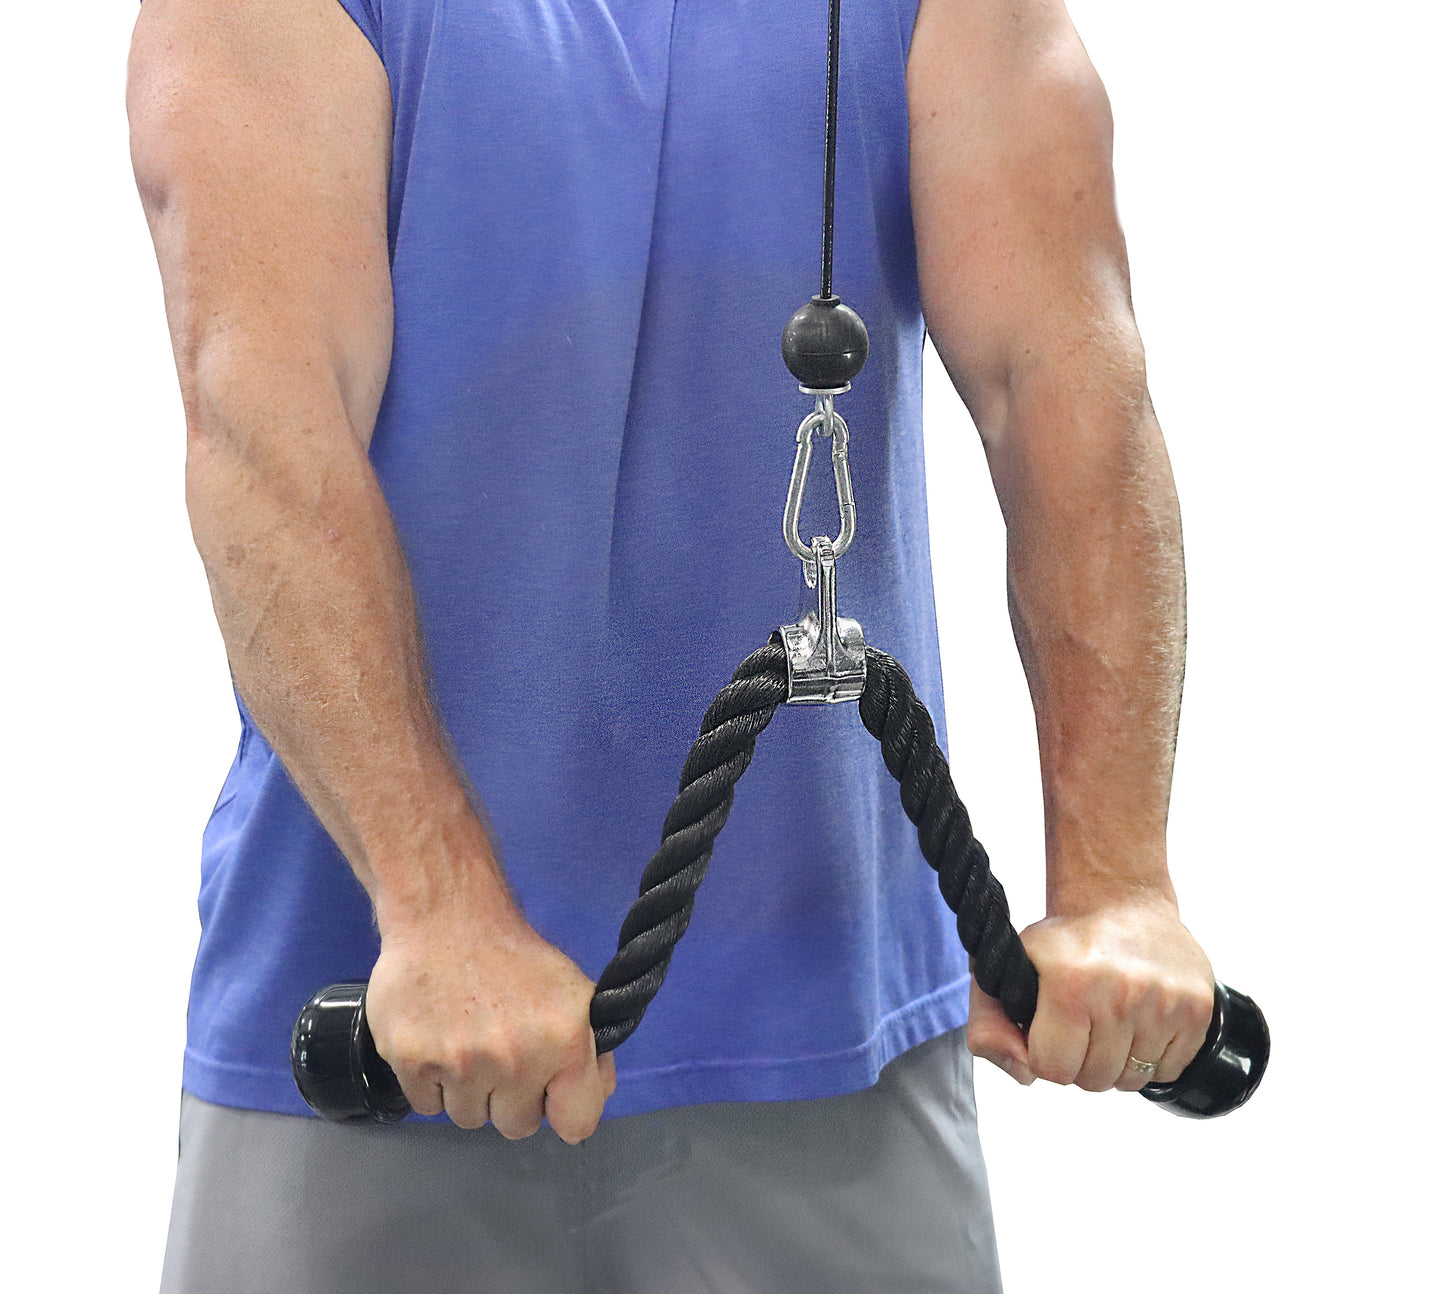 Triceps Pushdown Rope (MB-ROPE)